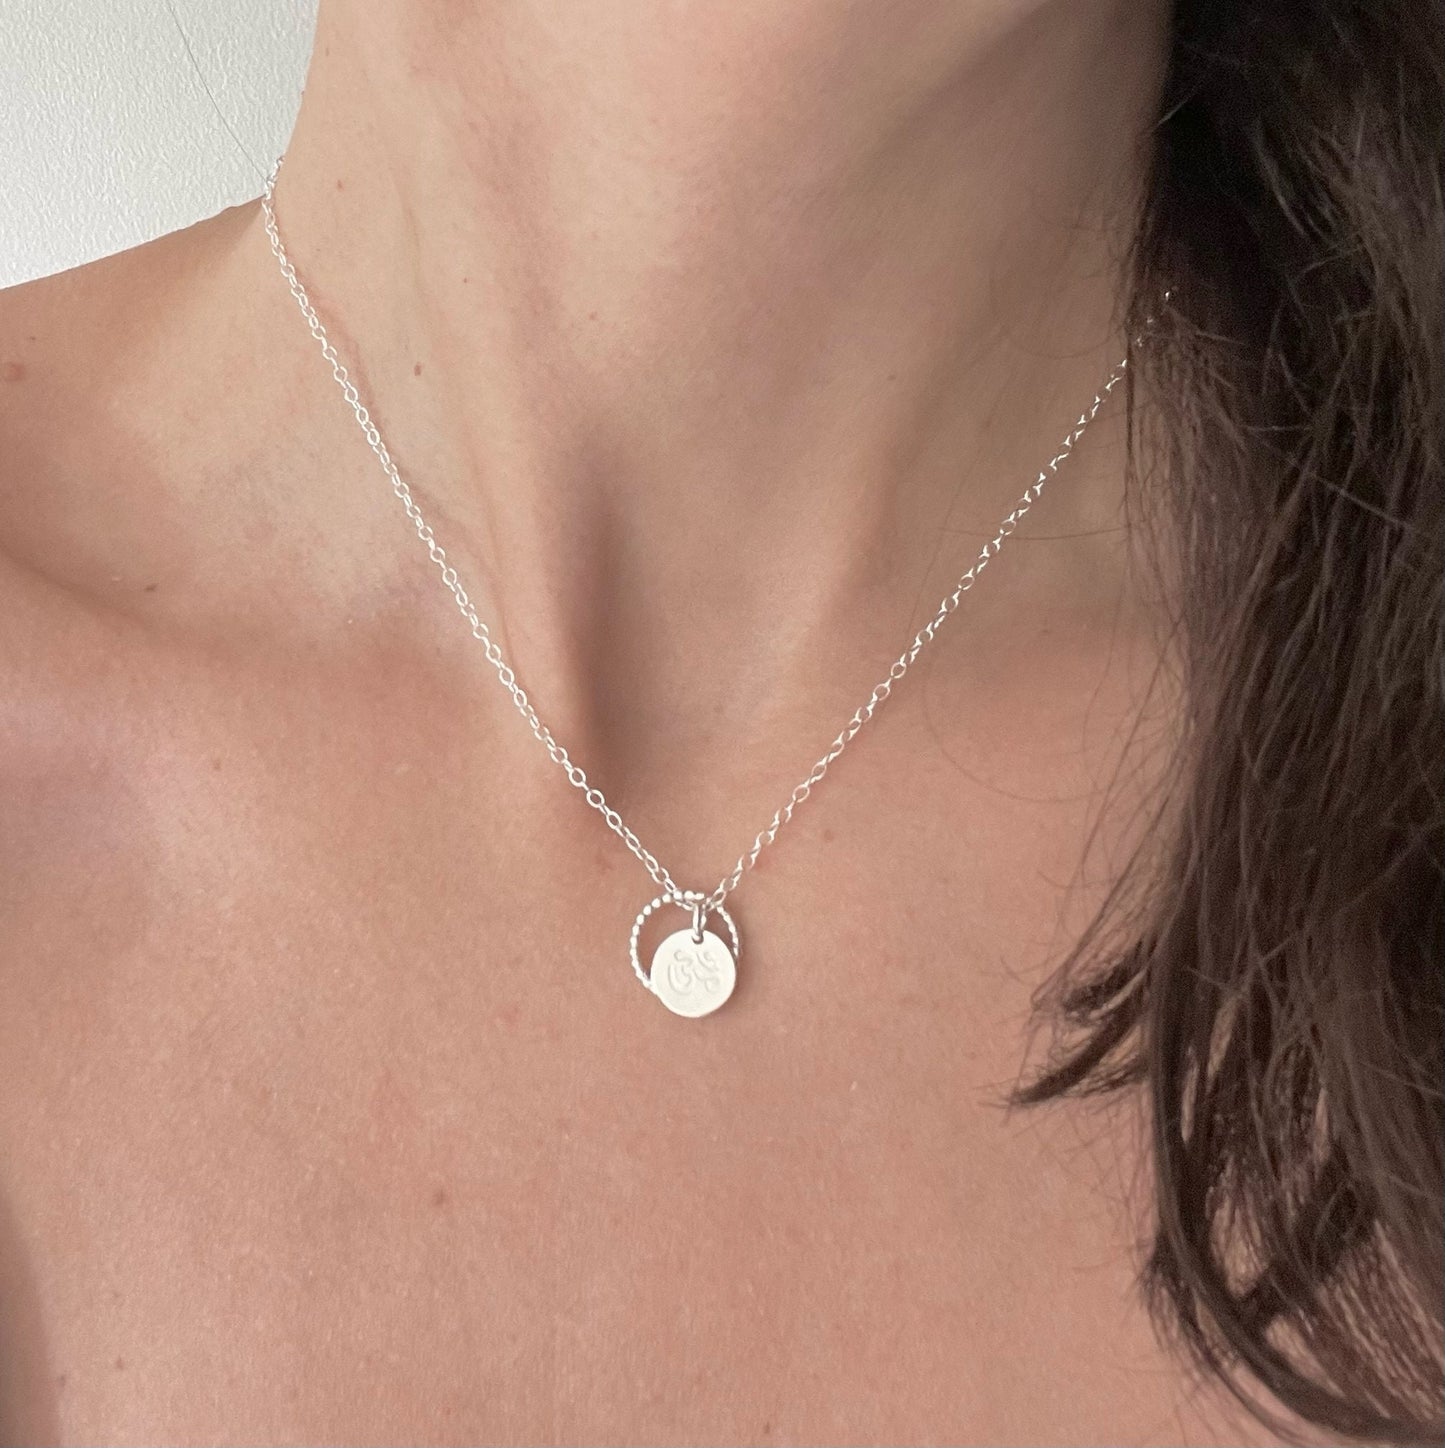 Silver Om necklace, meditation necklace